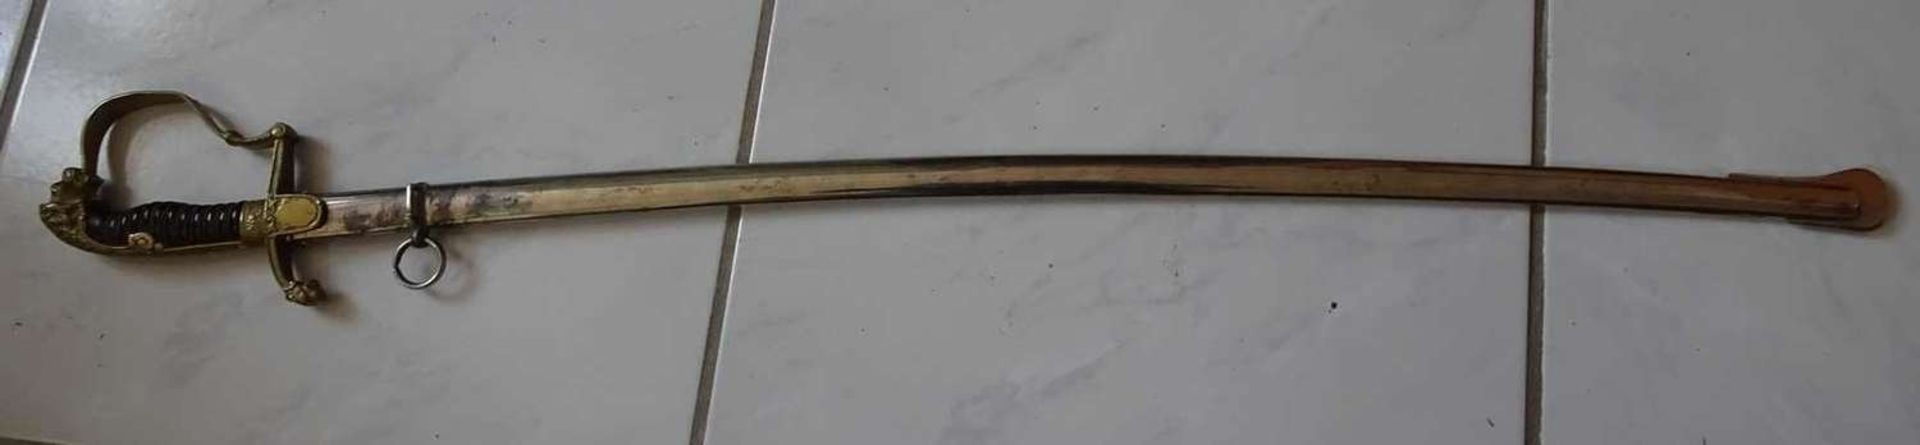 Hostart saber, replica of a cavalry saber around 1840. Very good condition. Length approx. 96.5